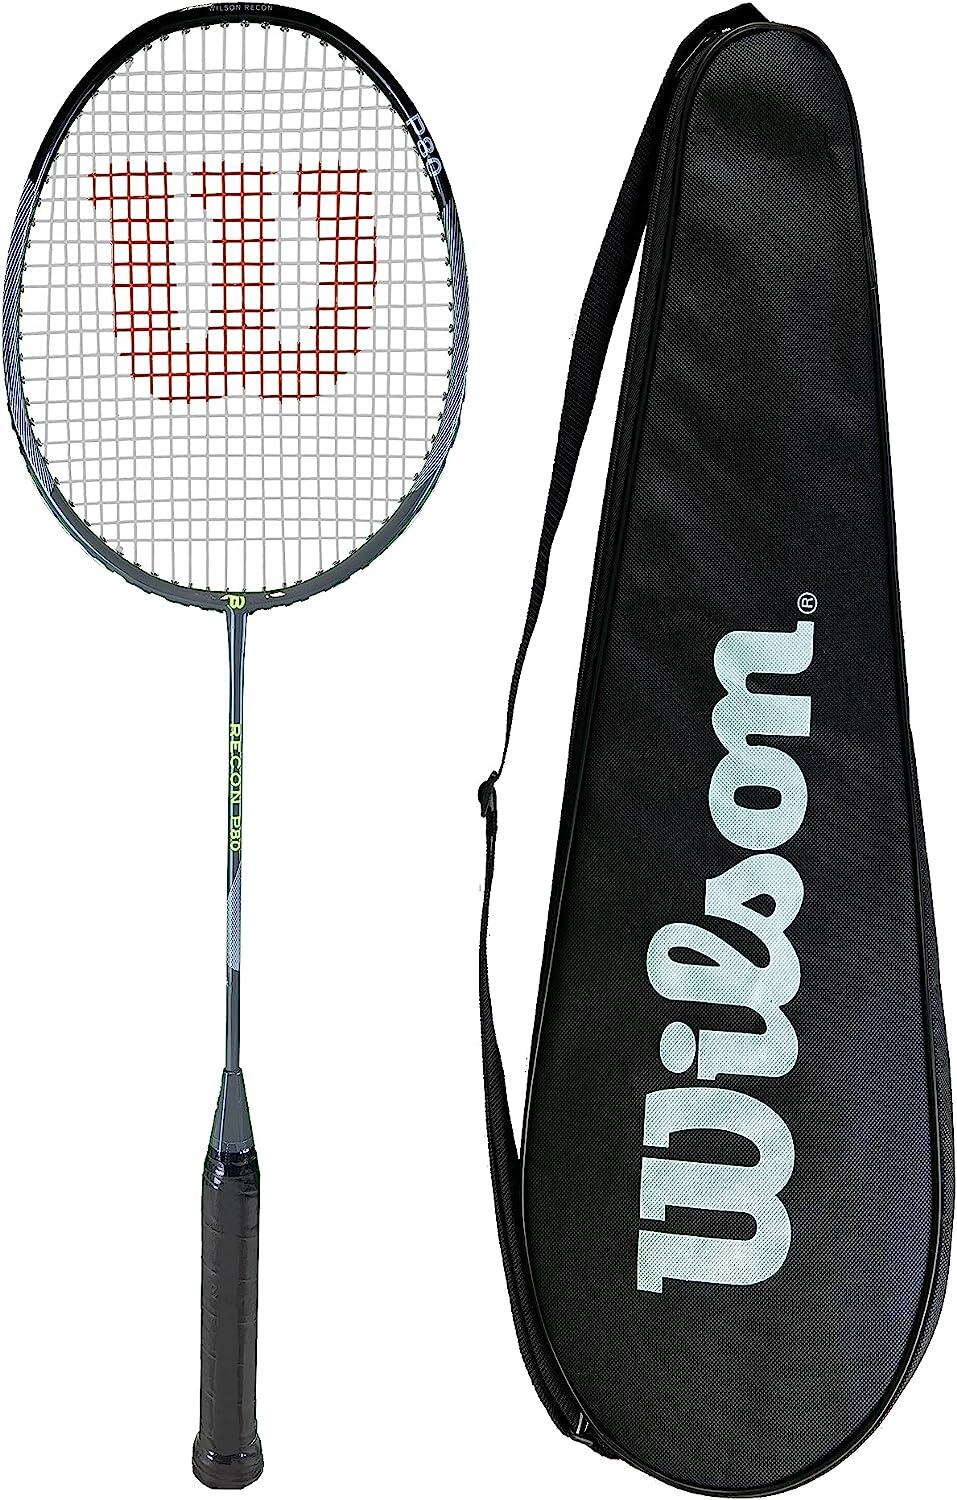 WILSON Wilson Recon P80 Badminton Racket & Carry Case